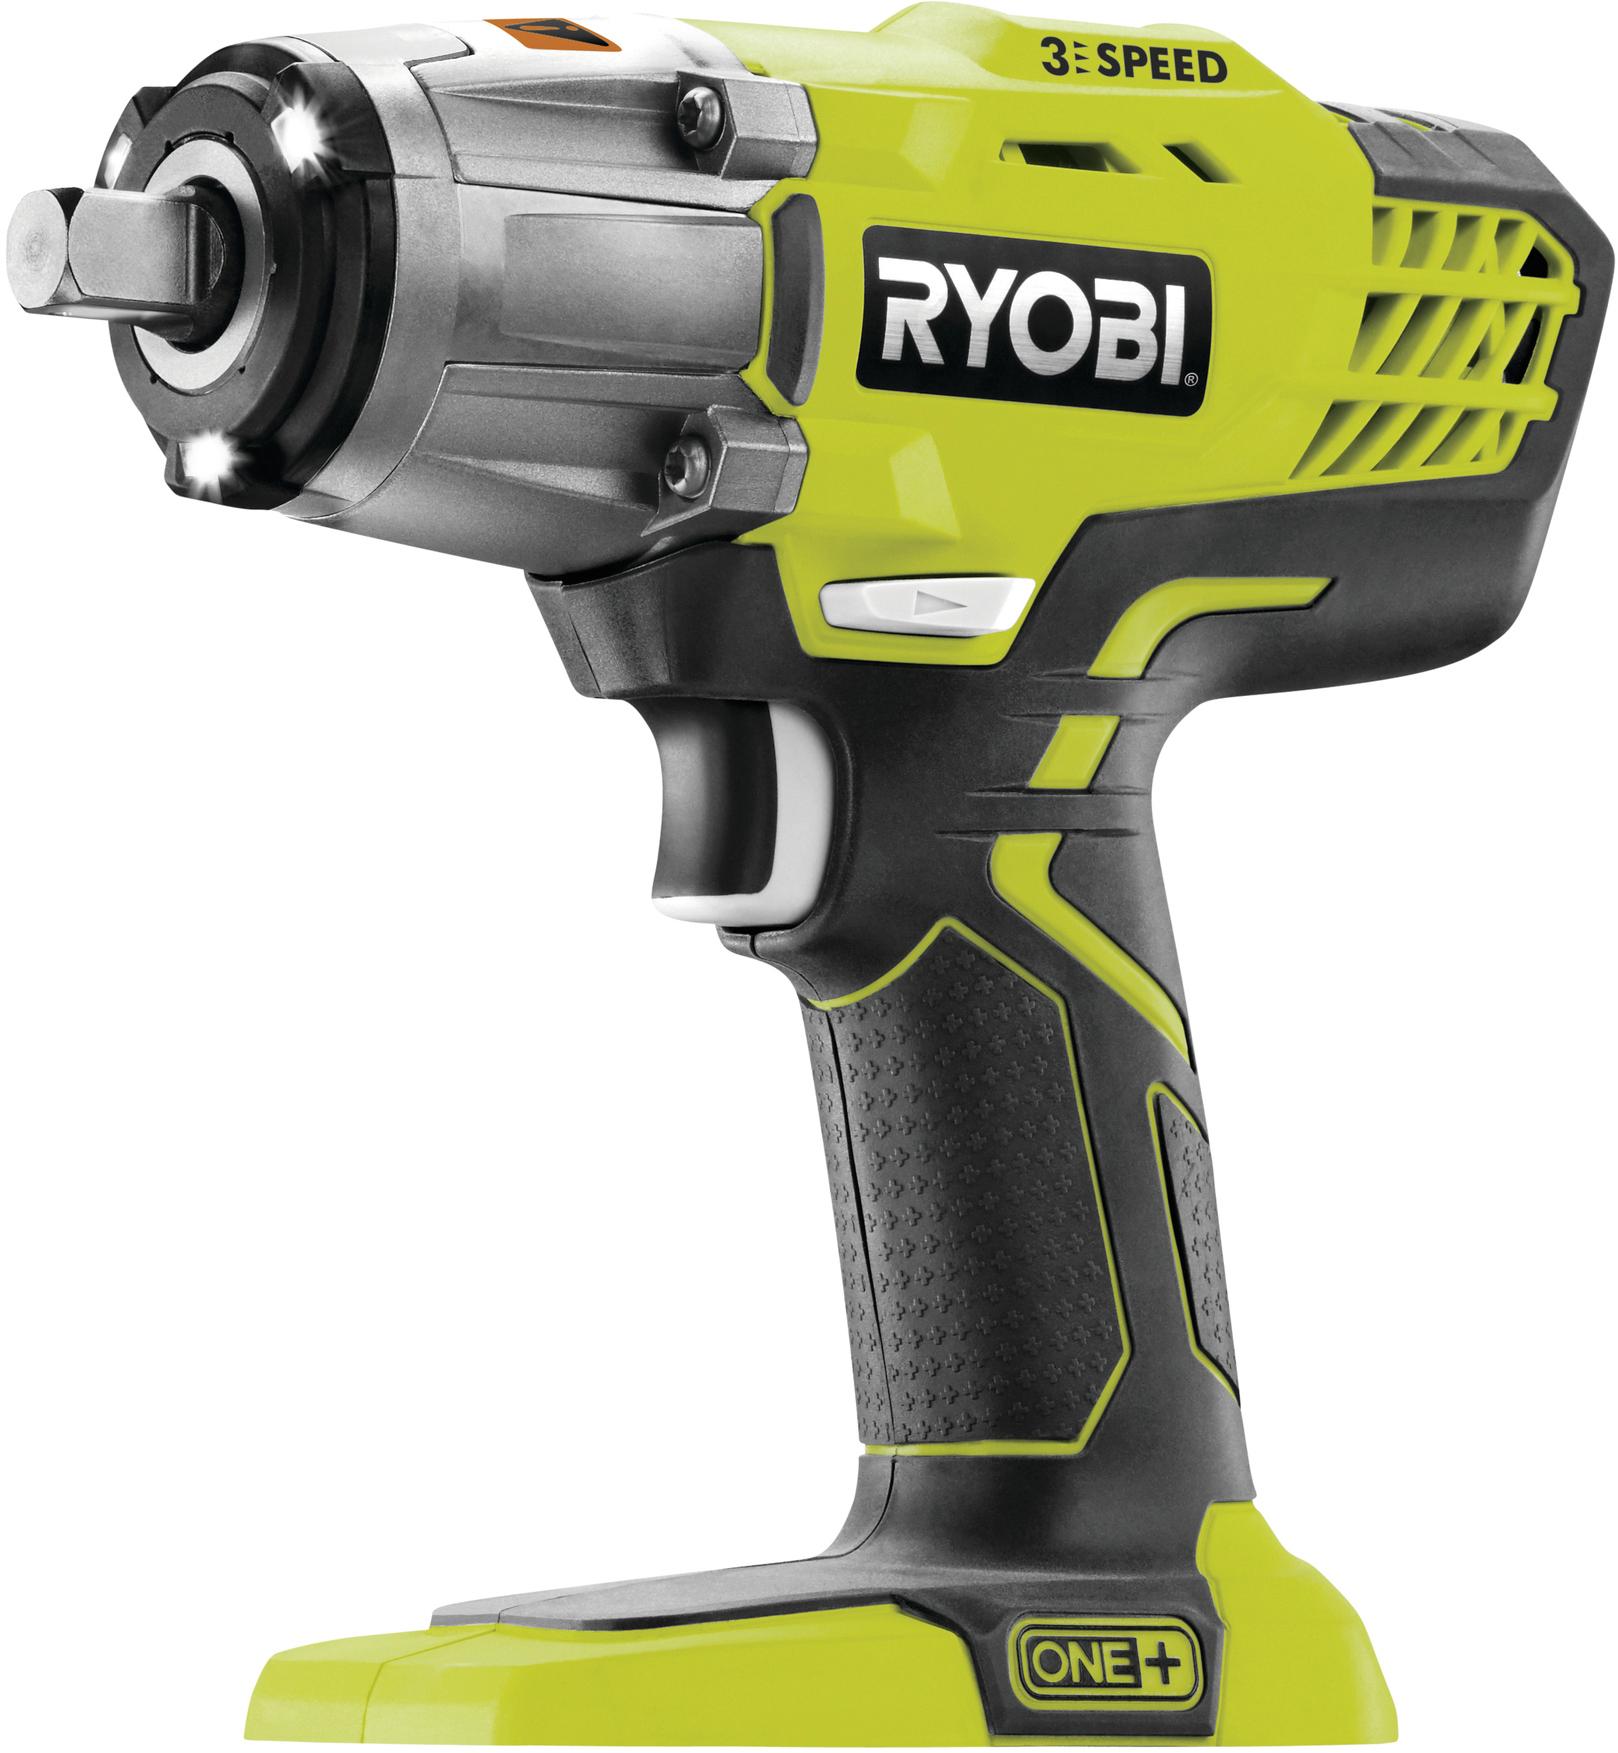 Ryobi 18V One+ Impact Wrench (Bare Tool)